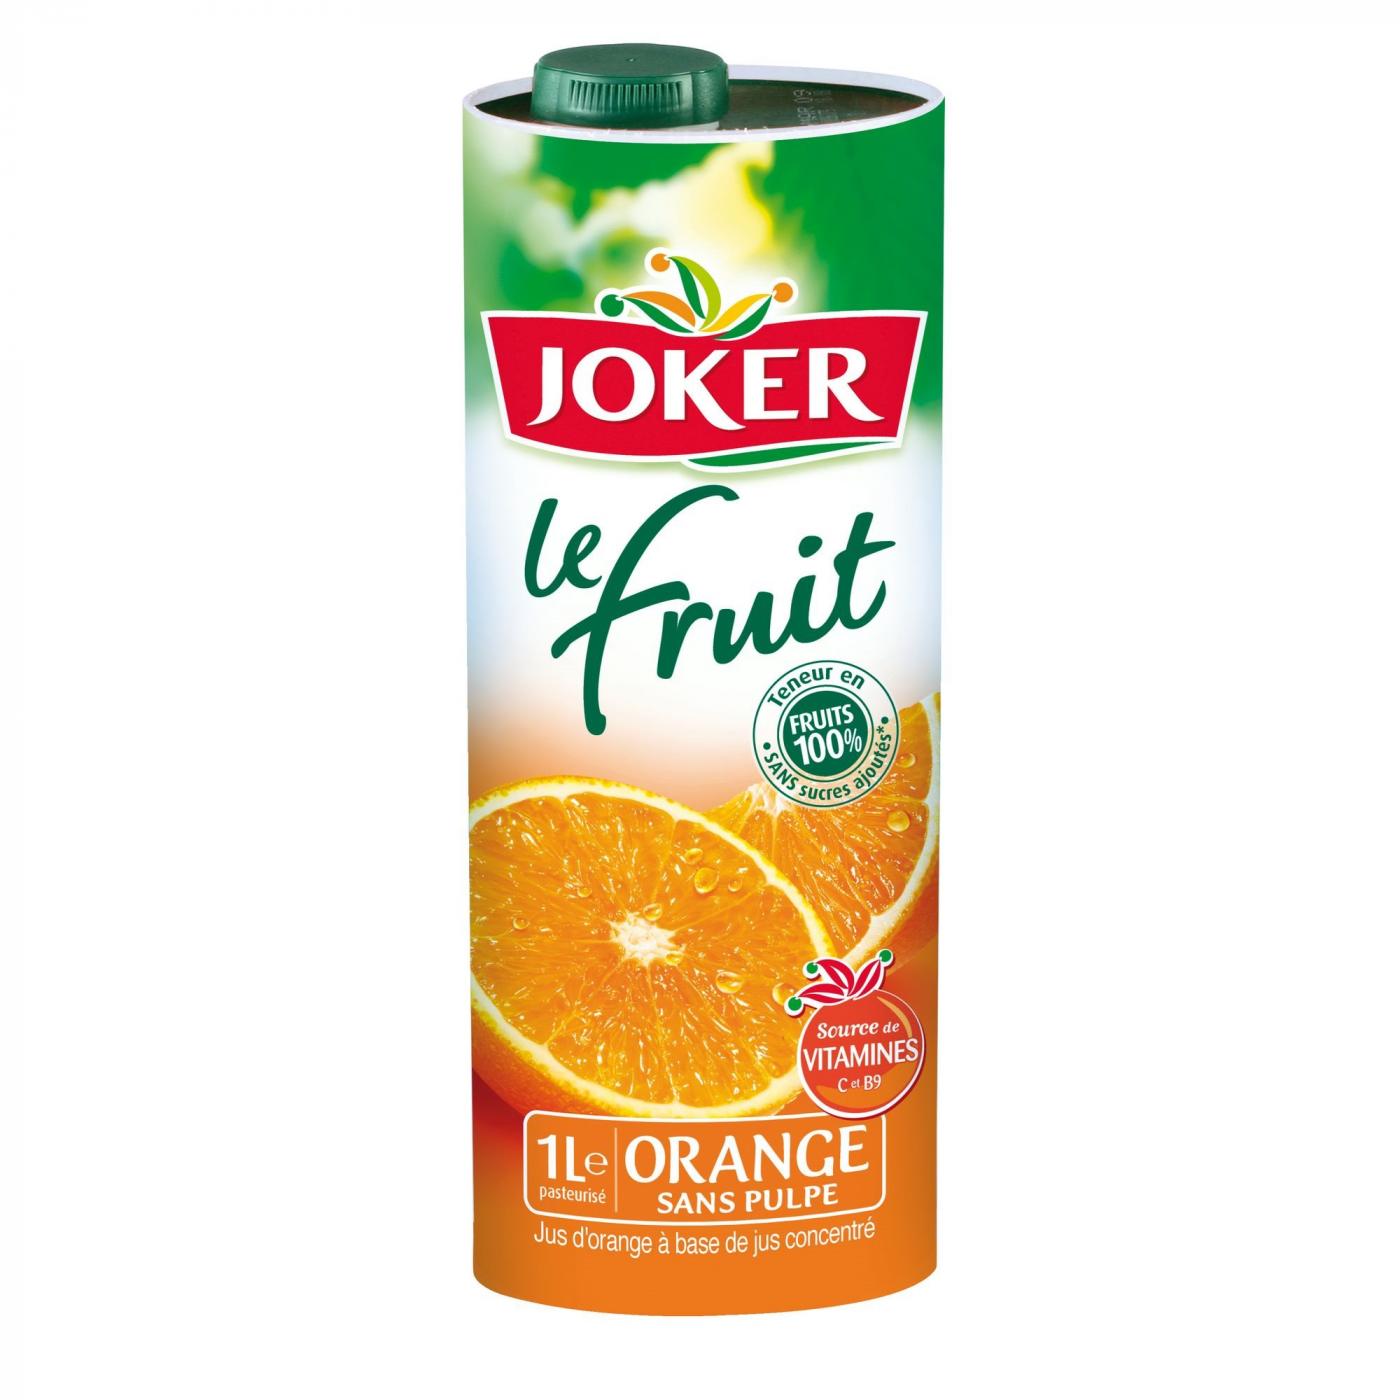 Joker Orange Without Pulp 1 L 